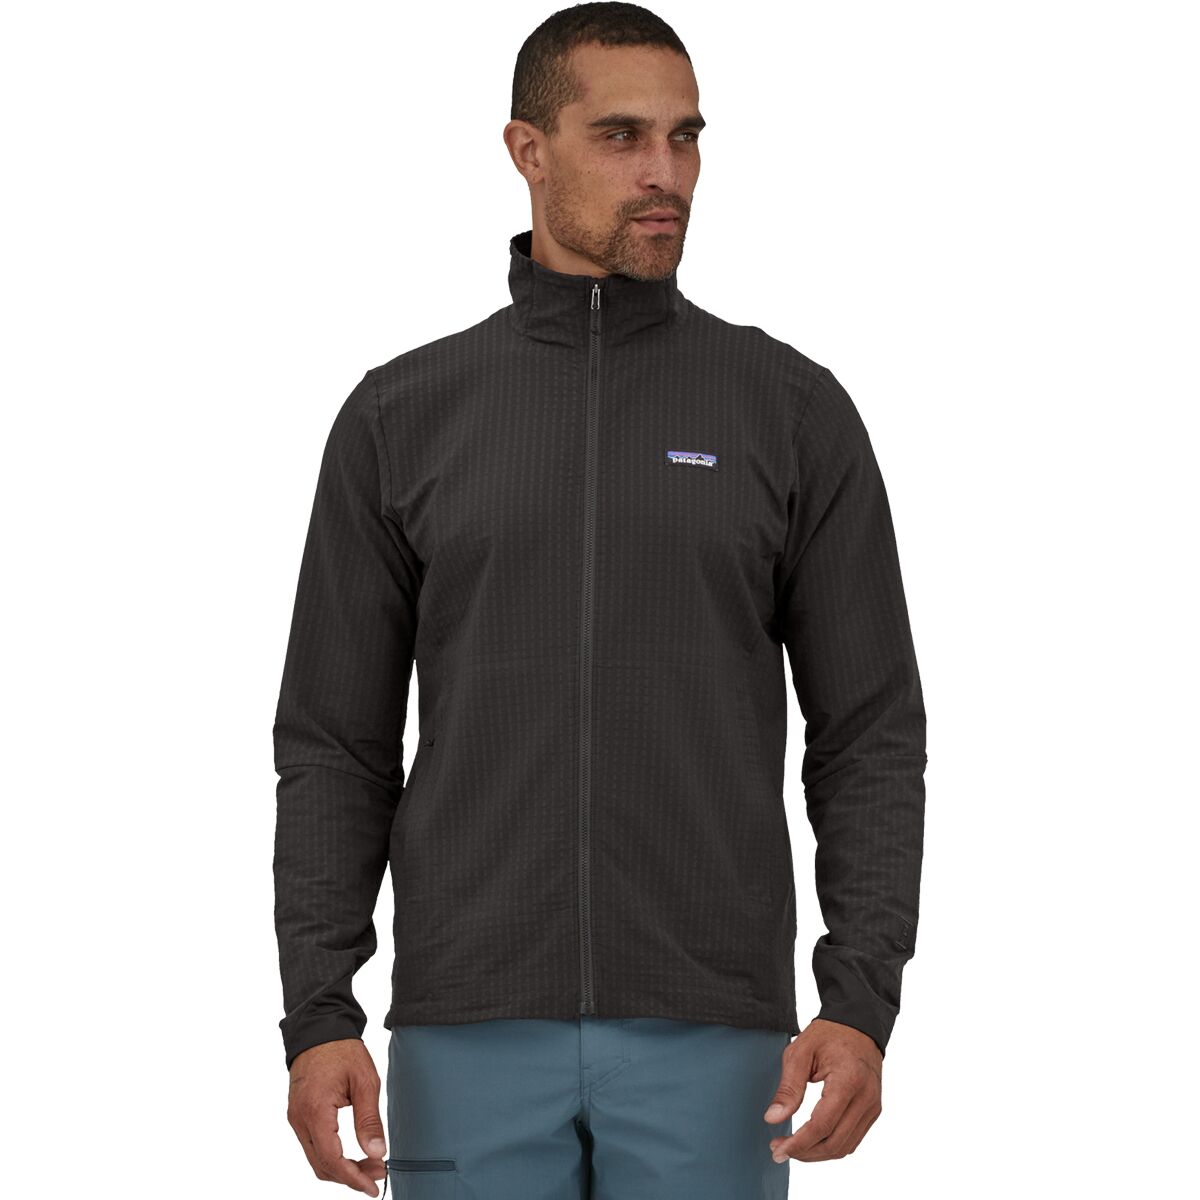 Patagonia R1 TechFace Fleece Jacket - Men's